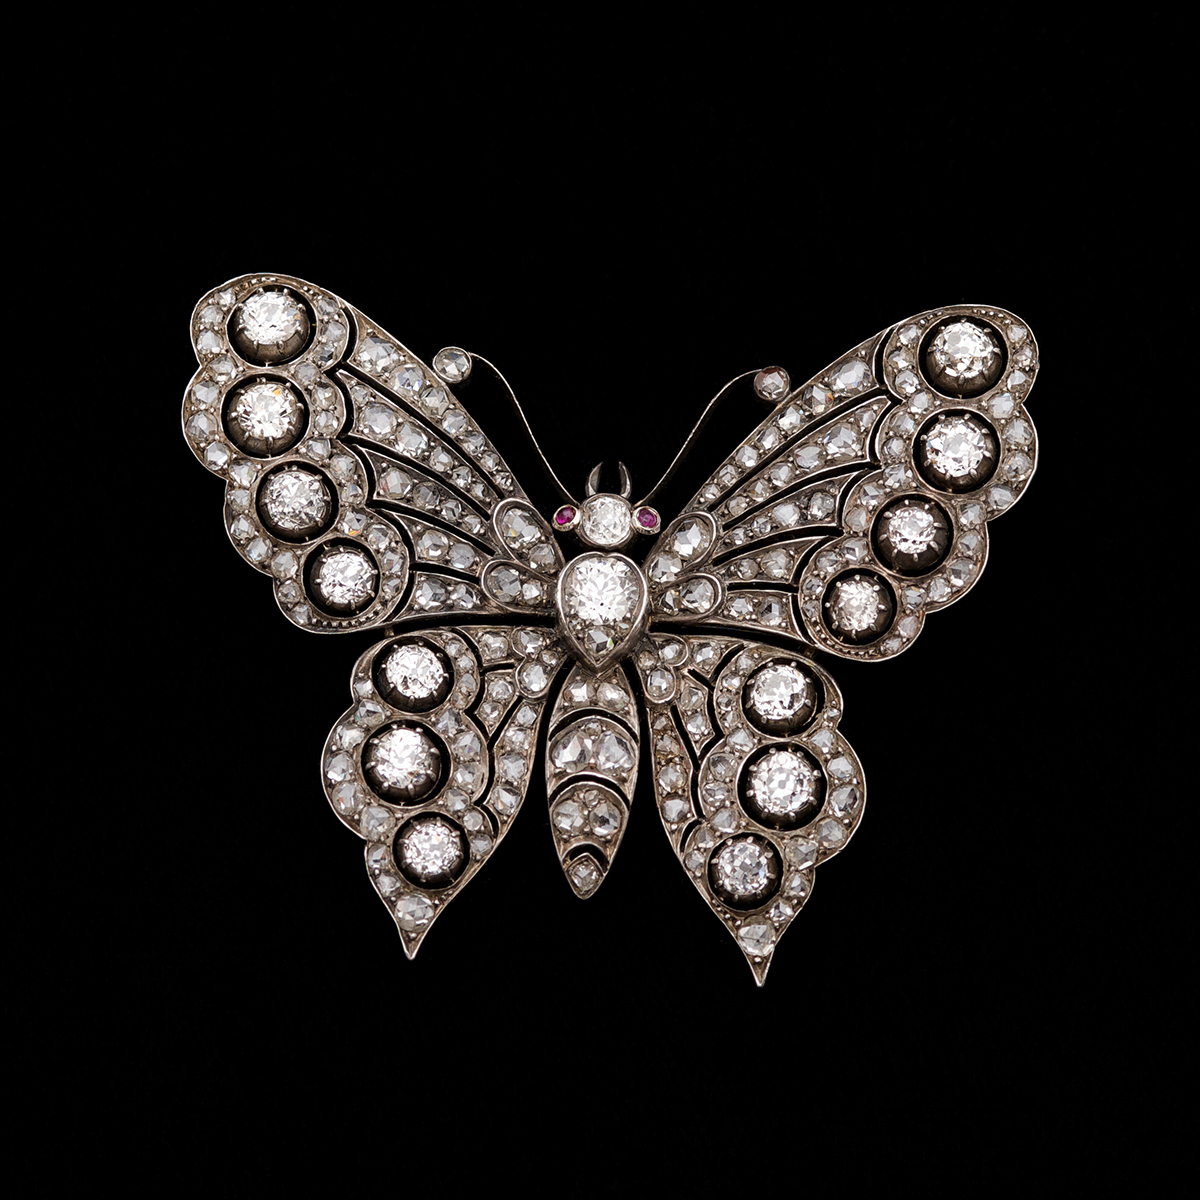 Antique diamond butterfly brooch